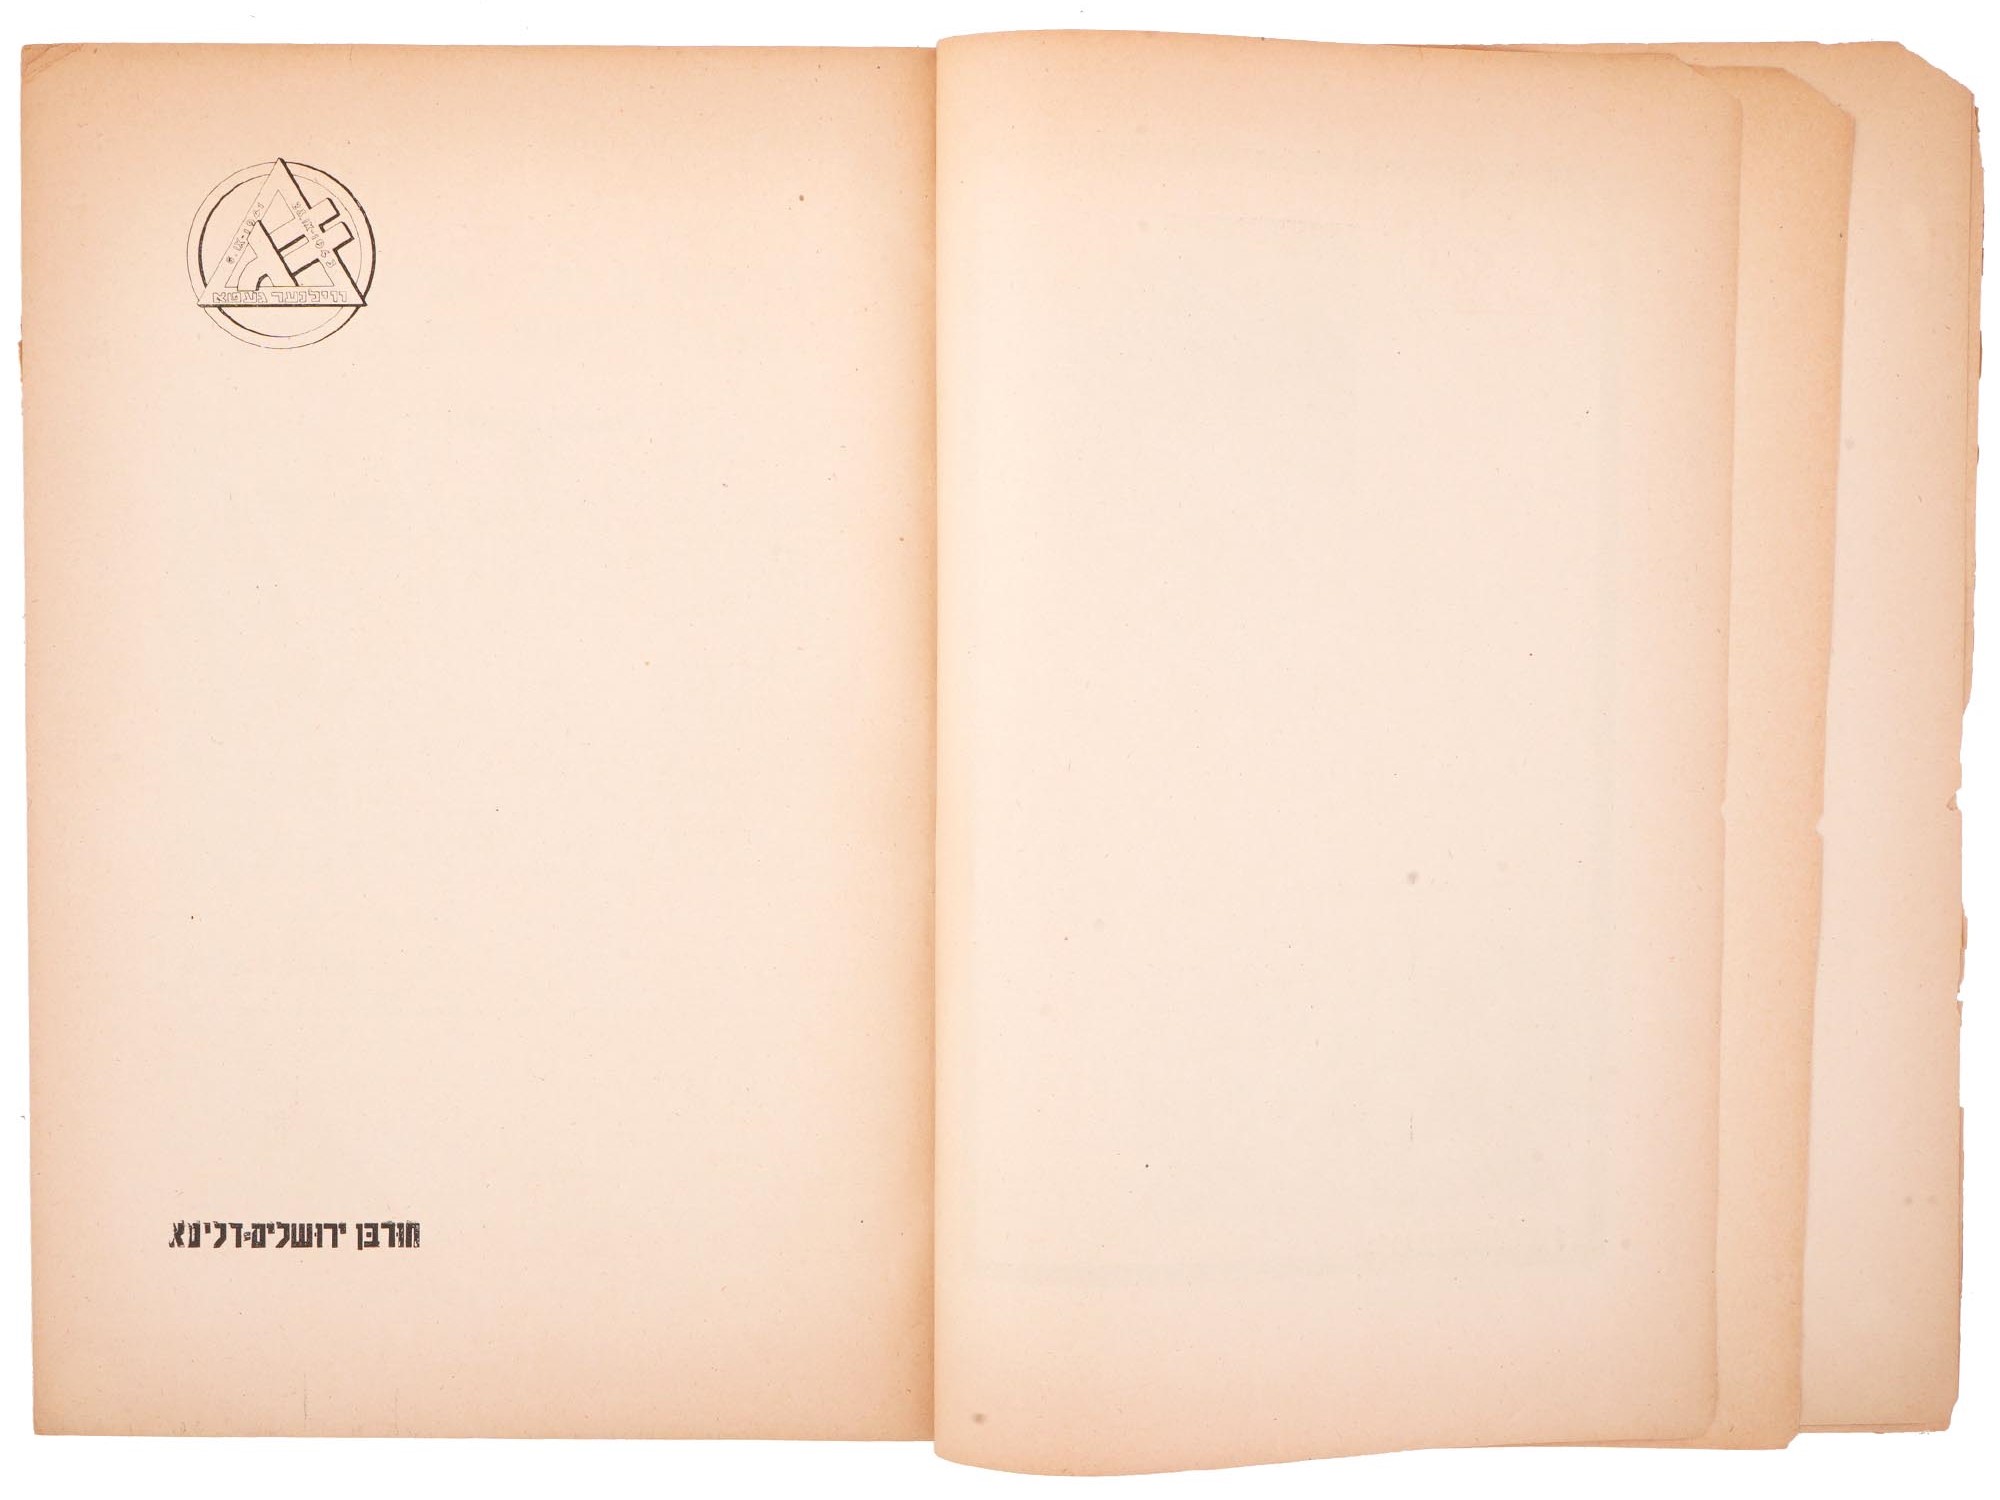 1947 HOLOCAUST MEMORIAL BOOK OF VILNIUS IN YIDDISH PIC-6